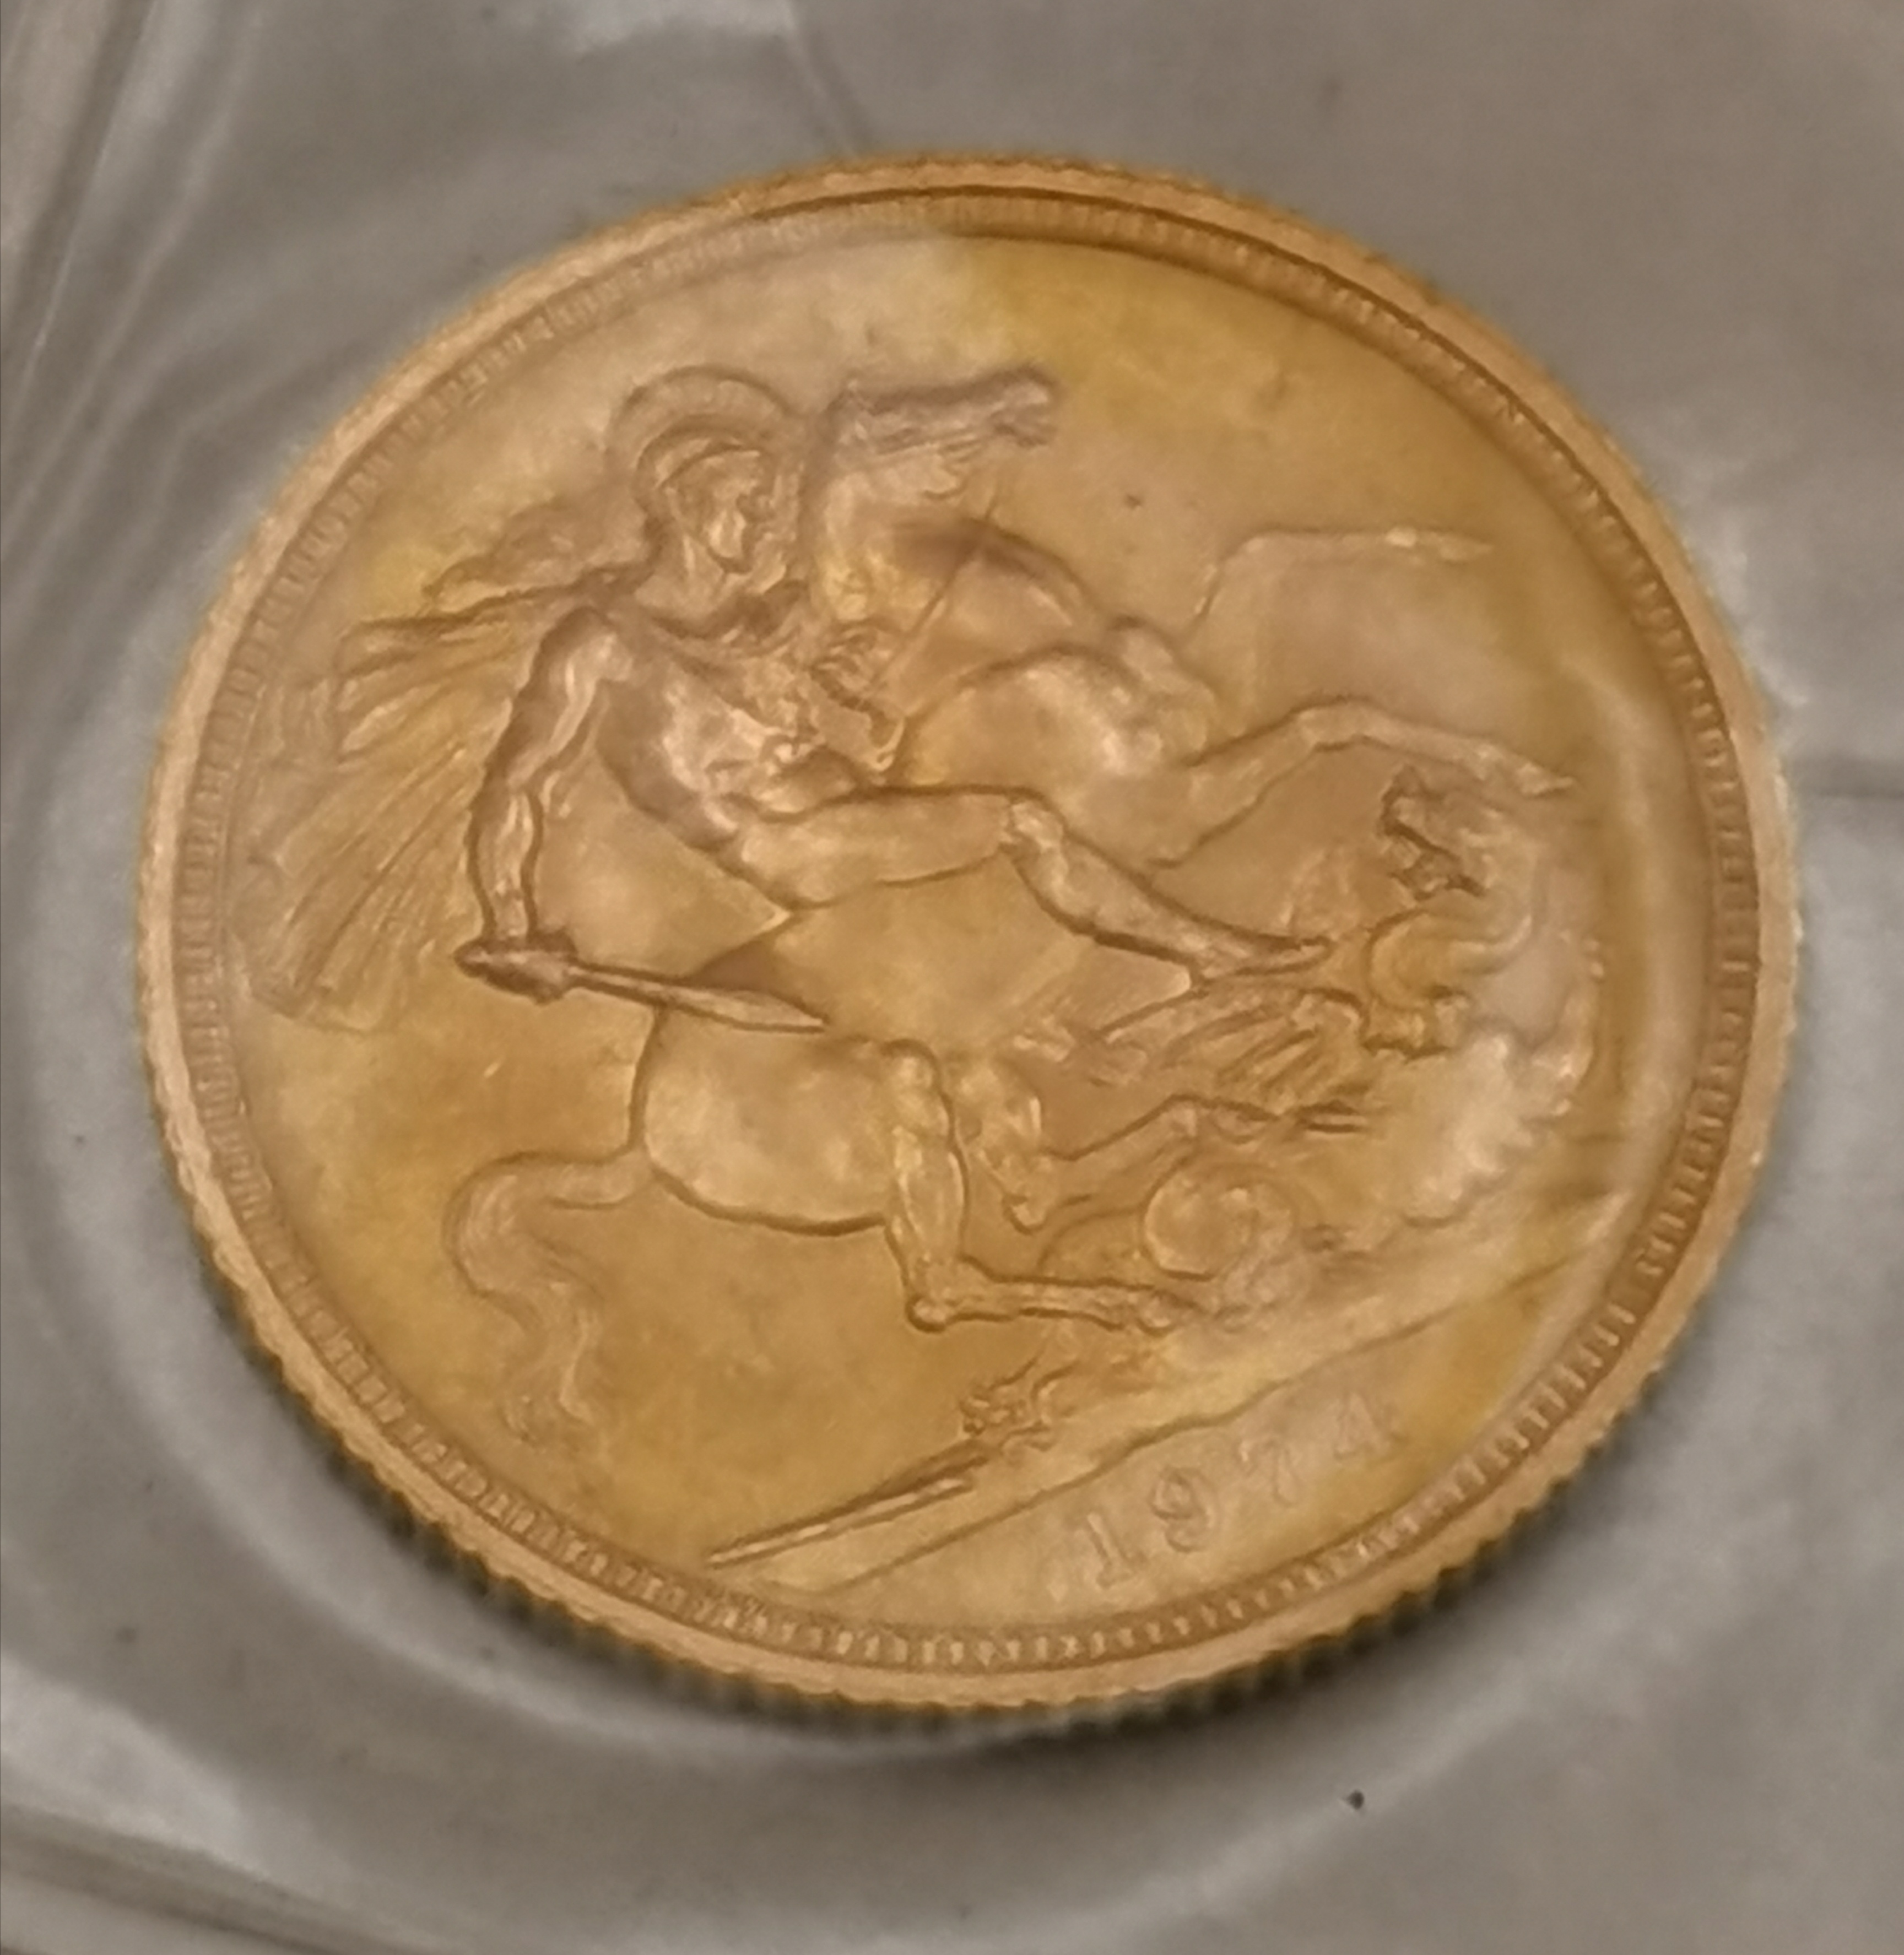 1974 gold sovereign